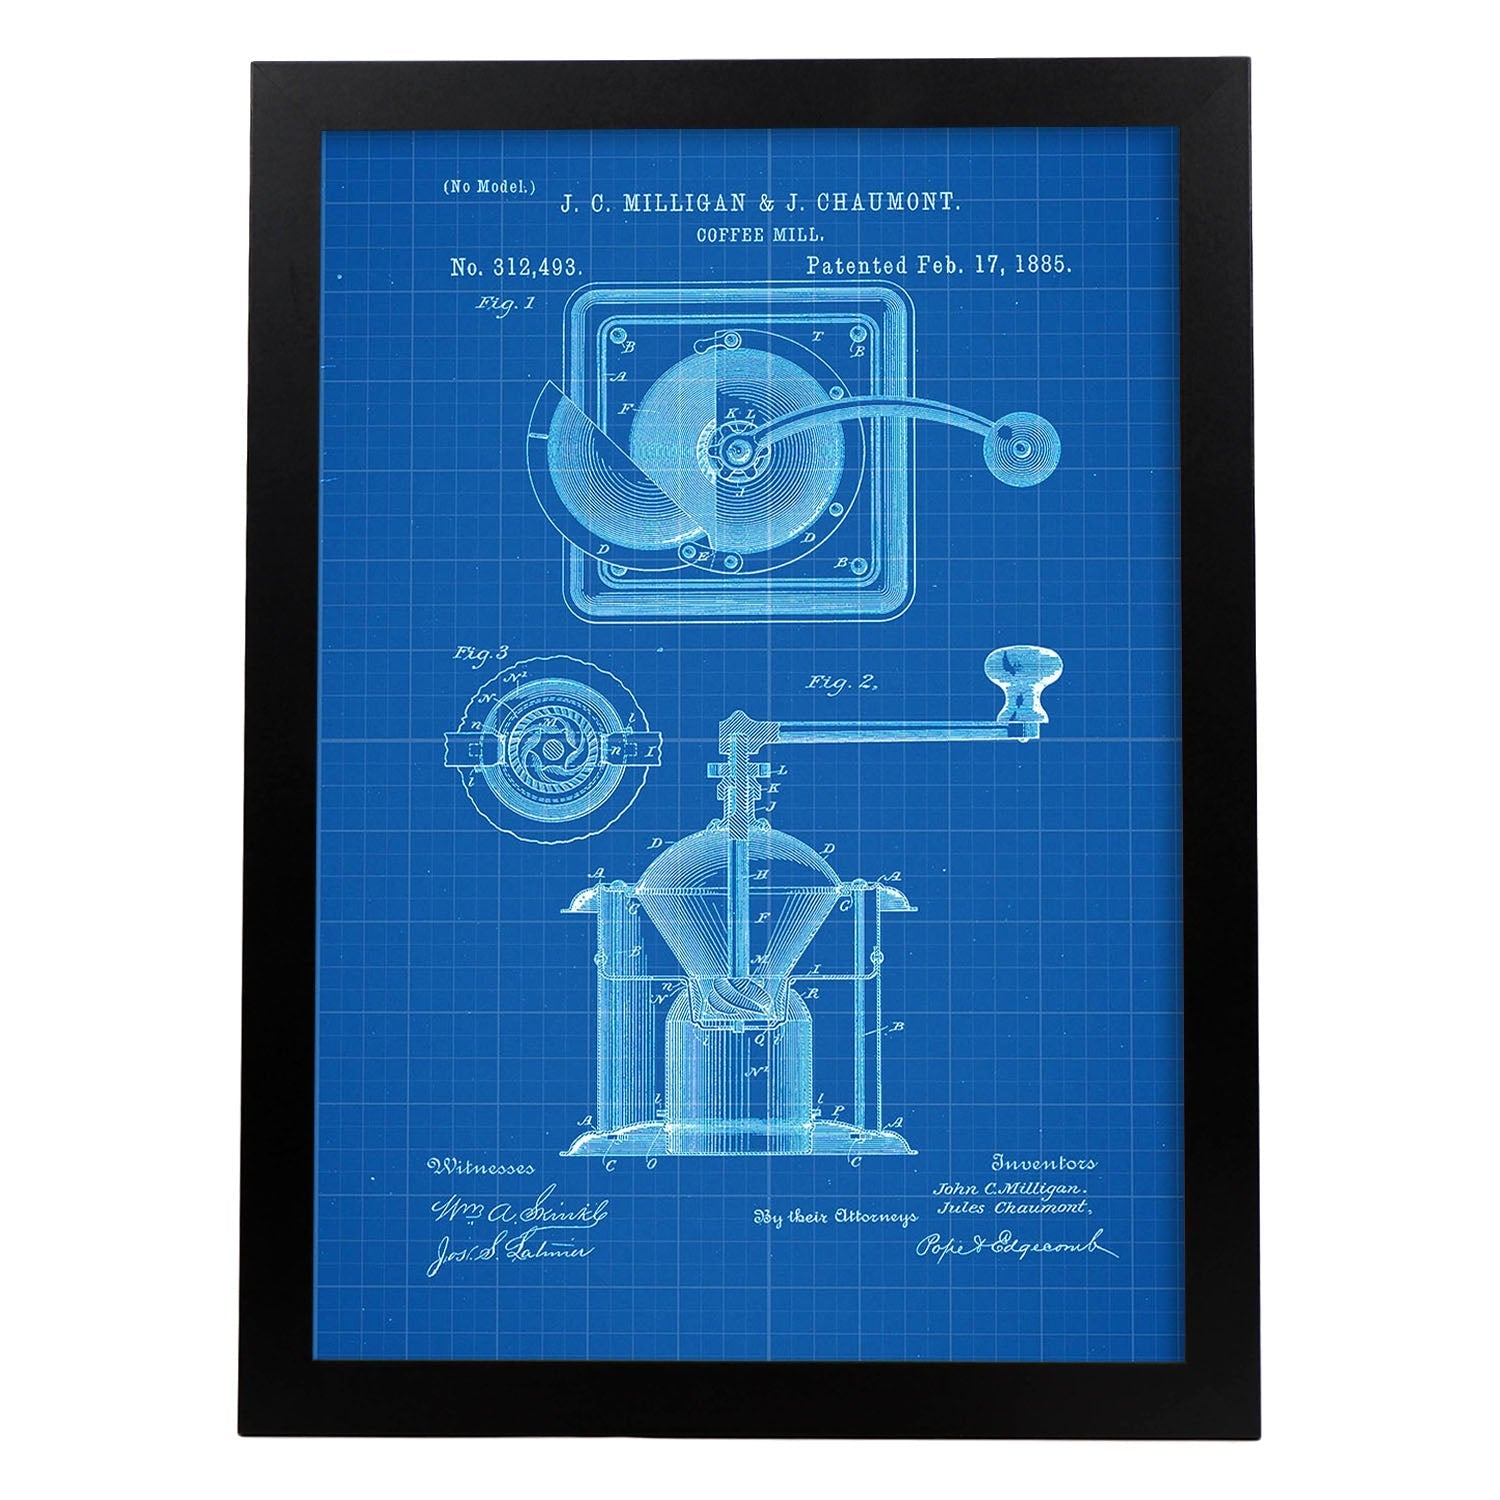 Poster con patente de Molinillo de café. Lámina con diseño de patente antigua-Artwork-Nacnic-A3-Marco Negro-Nacnic Estudio SL